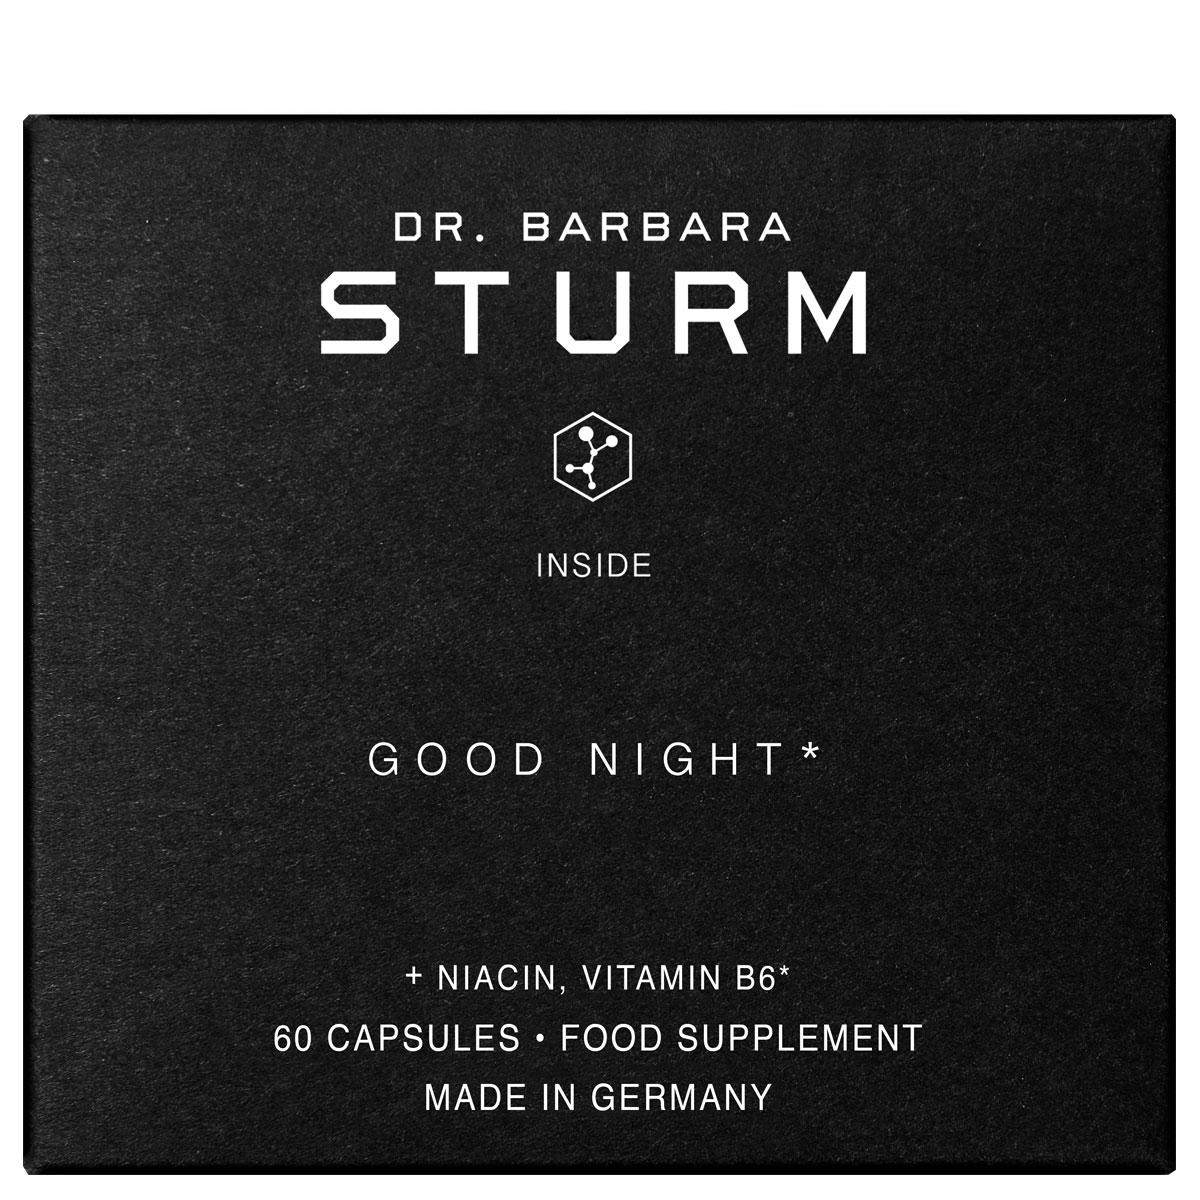 Dr. Barbara Sturm Good Night* 60 Capsules Pro Packung 60 Stück - 3